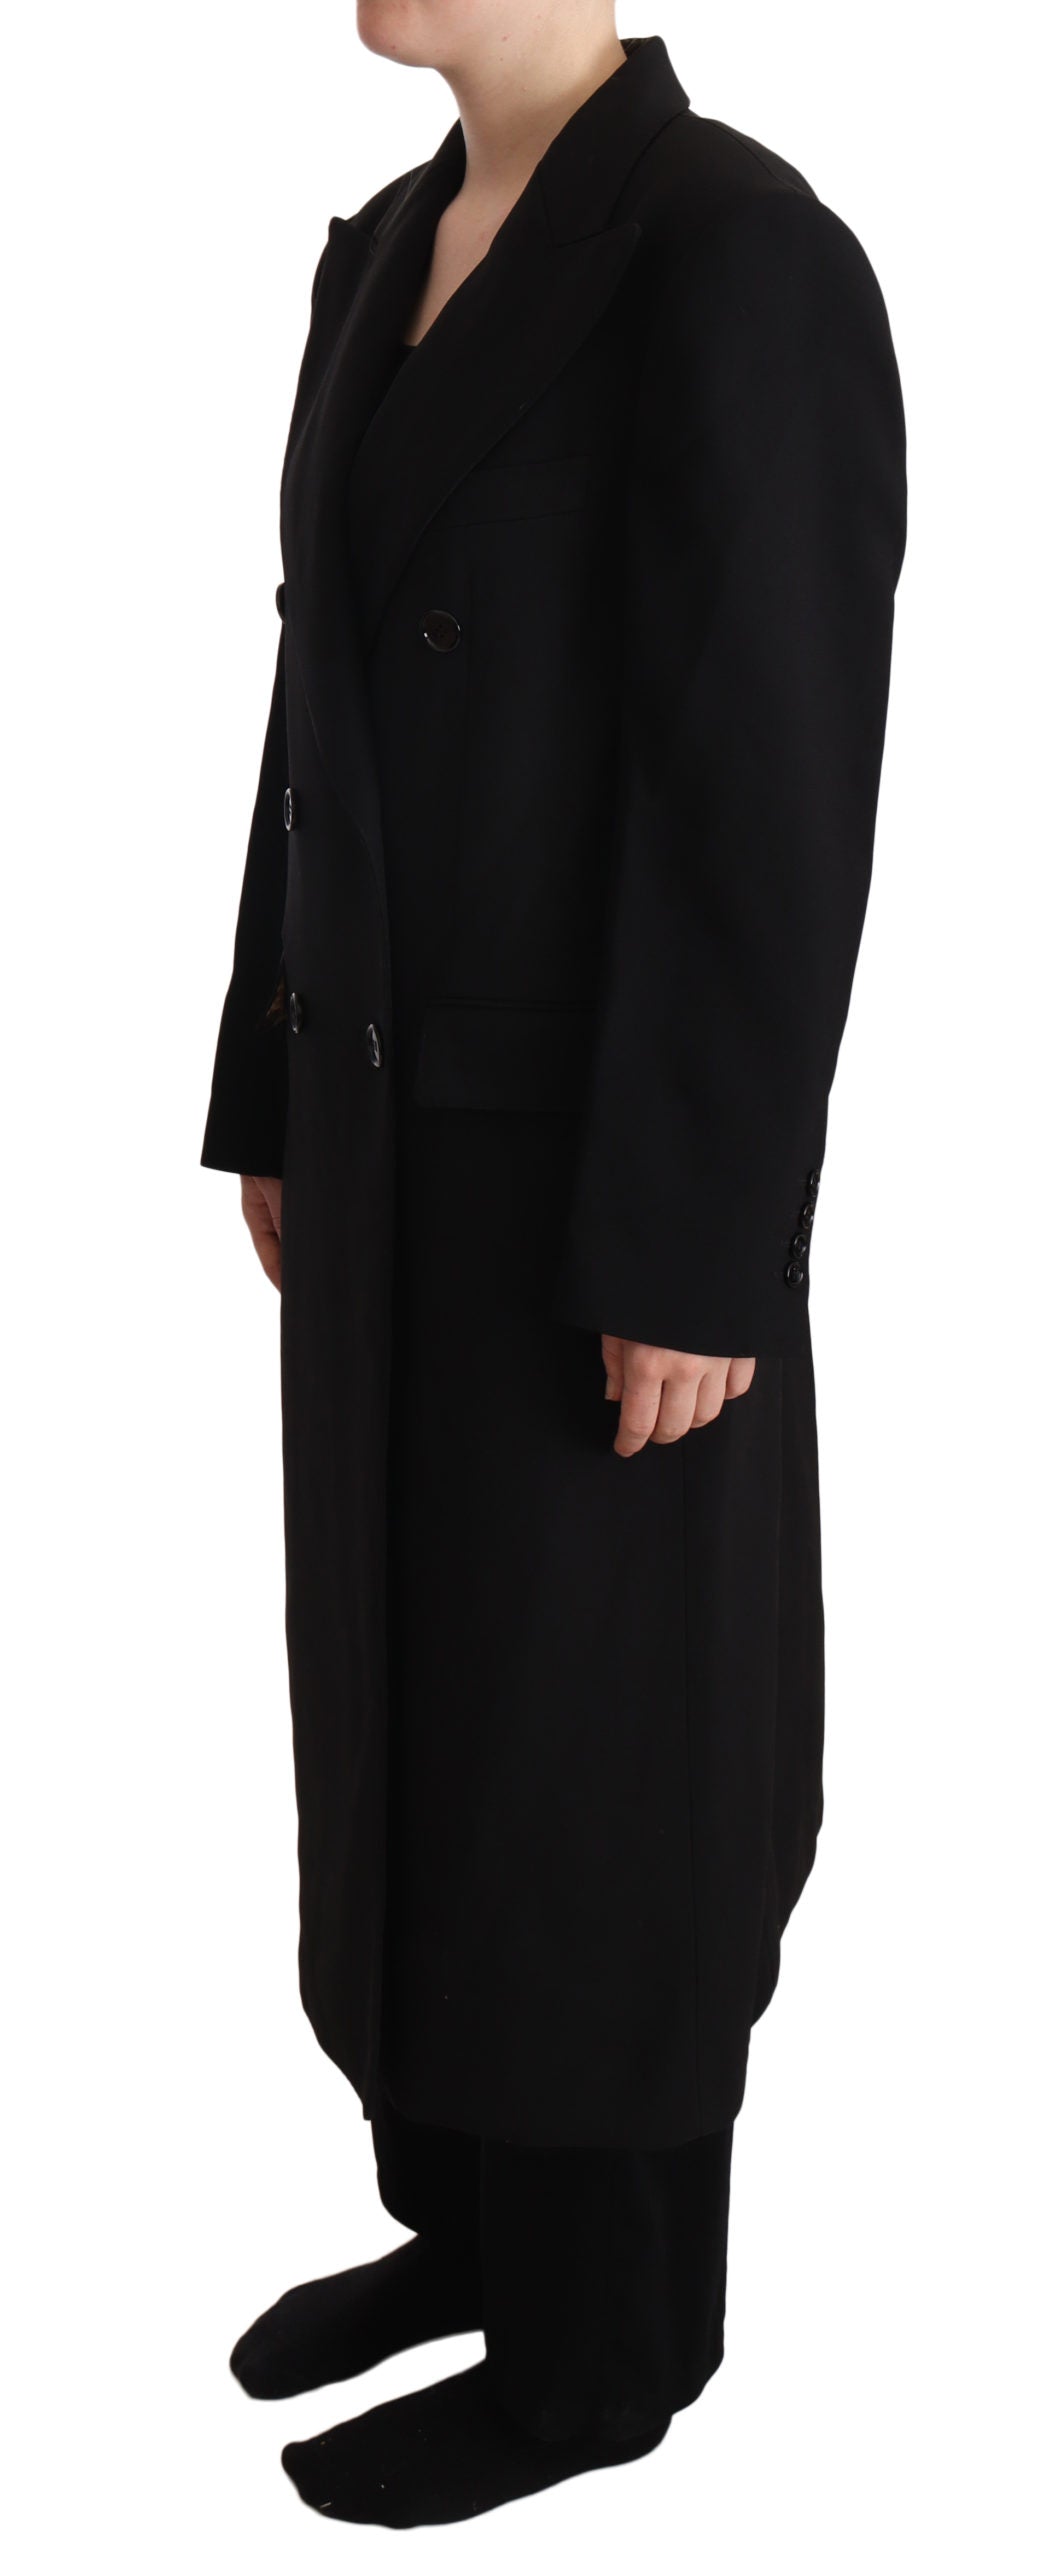 Black Double Breasted Overcoat Jacket